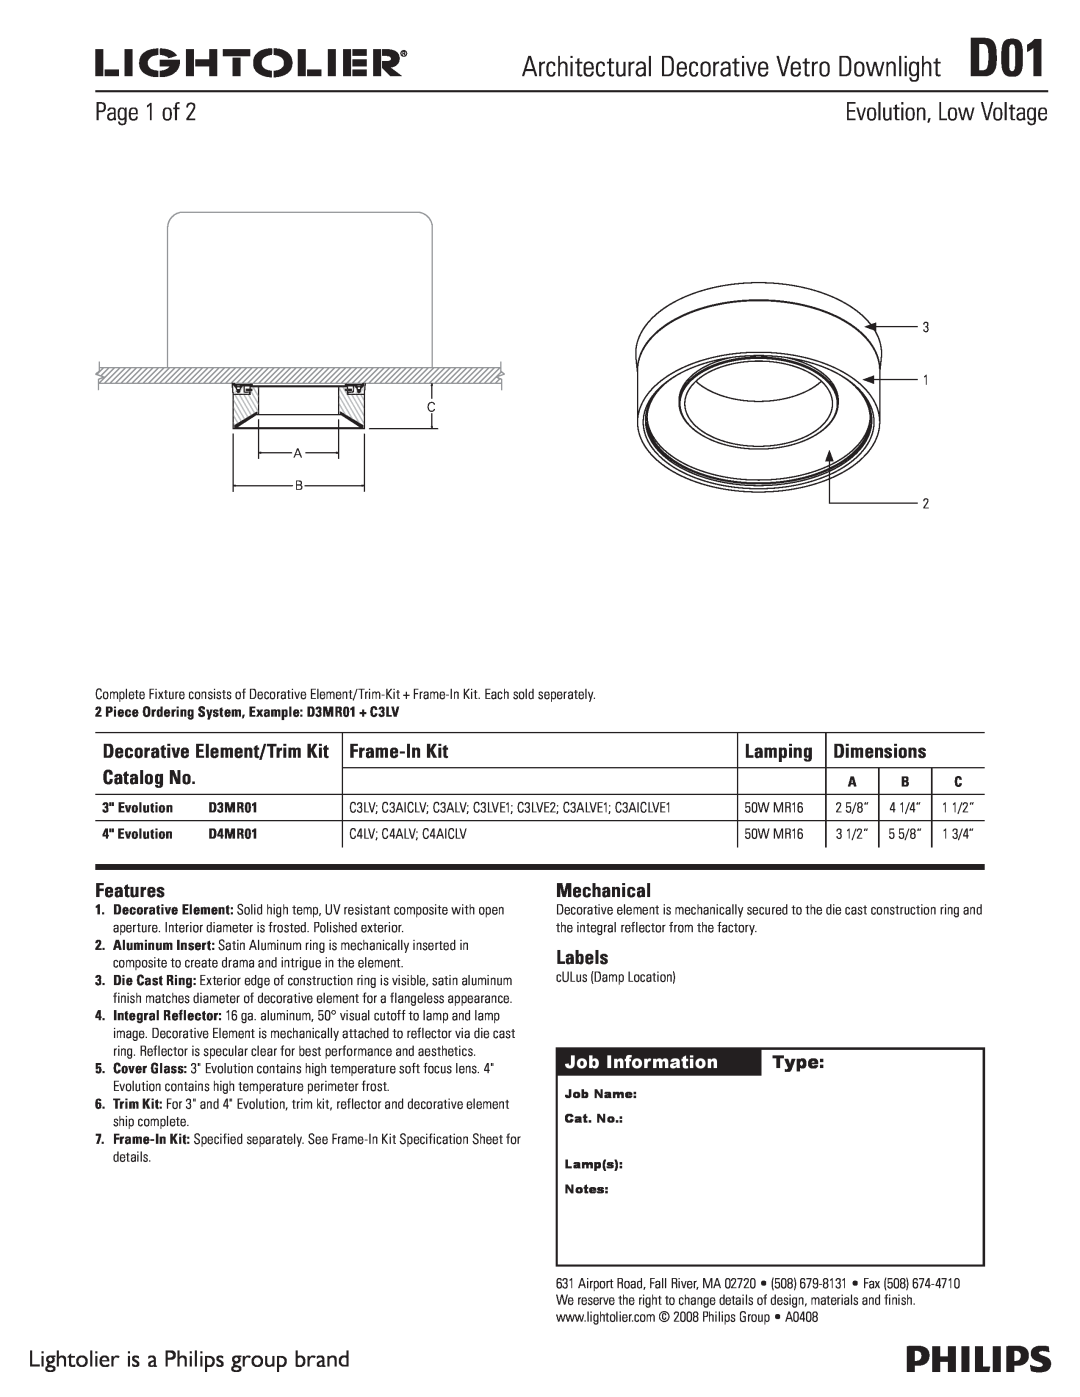 Lightolier dimensions Architectural Decorative Vetro DownlightD01, Evolution, Low Voltage, Page 1 of, Job Information 